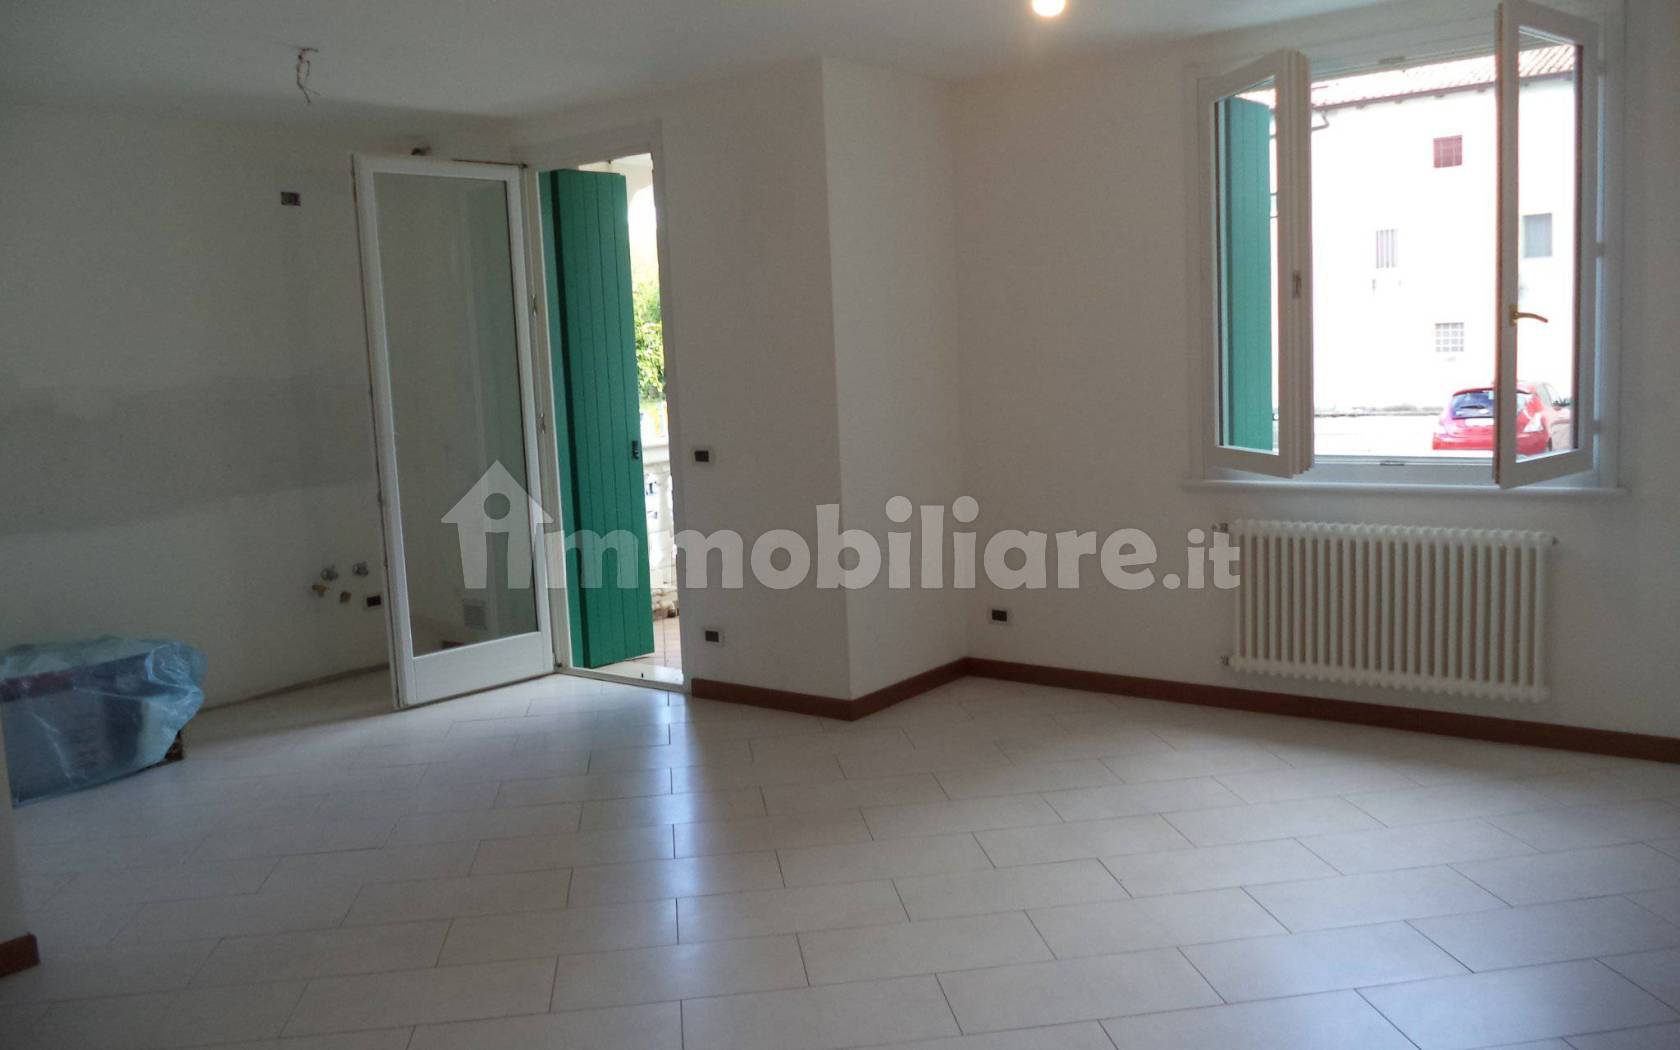 Appartamento nuovo, piano rialzato, Beivars, Udine